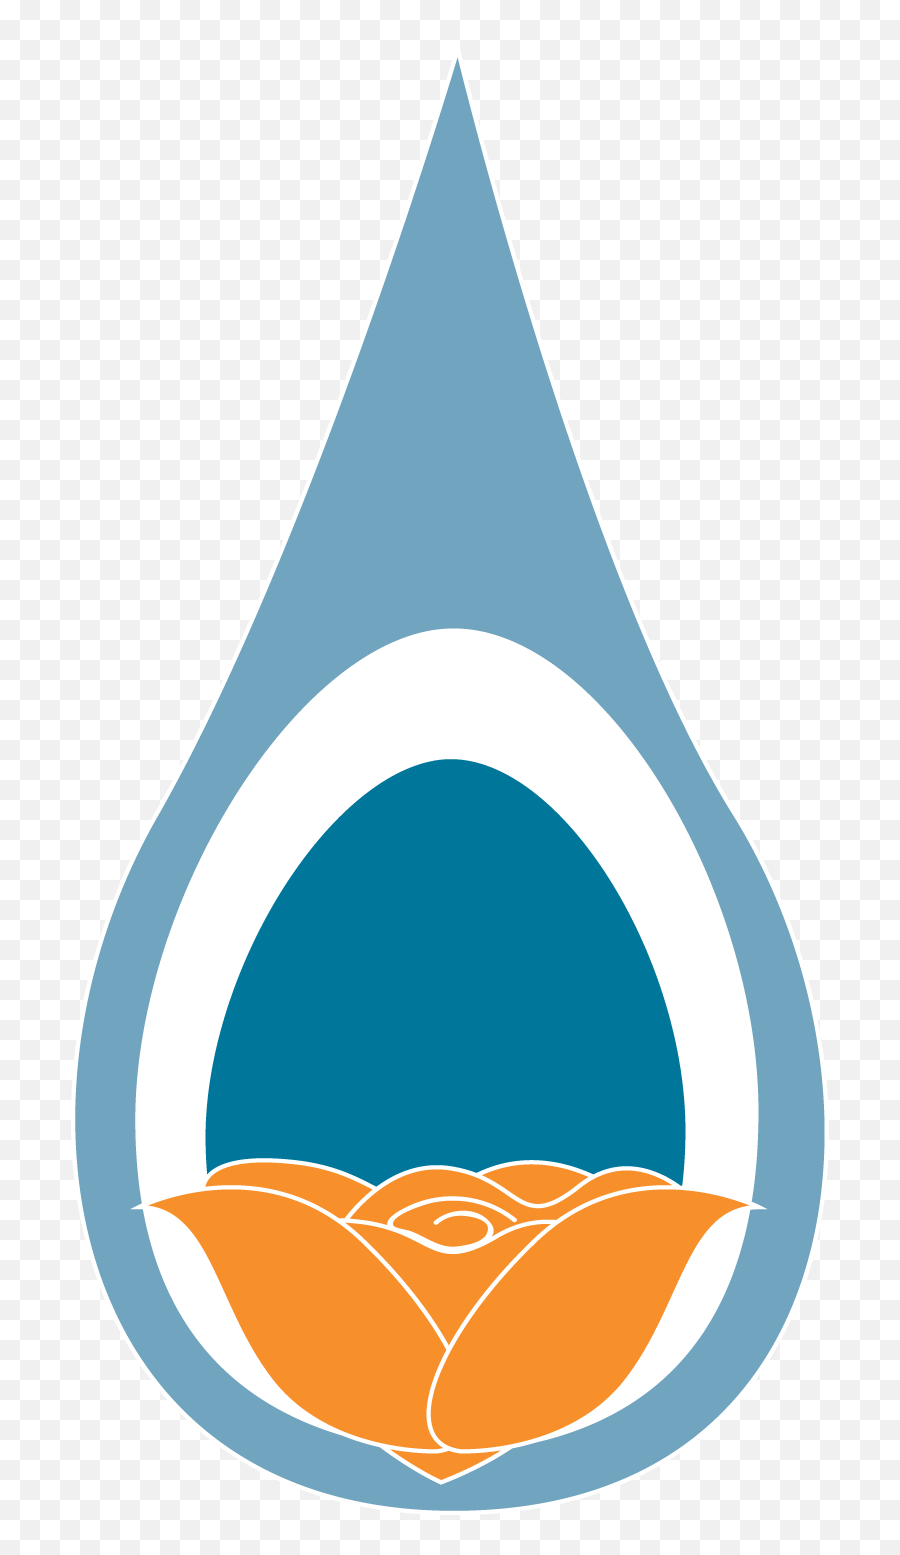 Personal Logo On Behance Emoji,Peacock Feather Logo